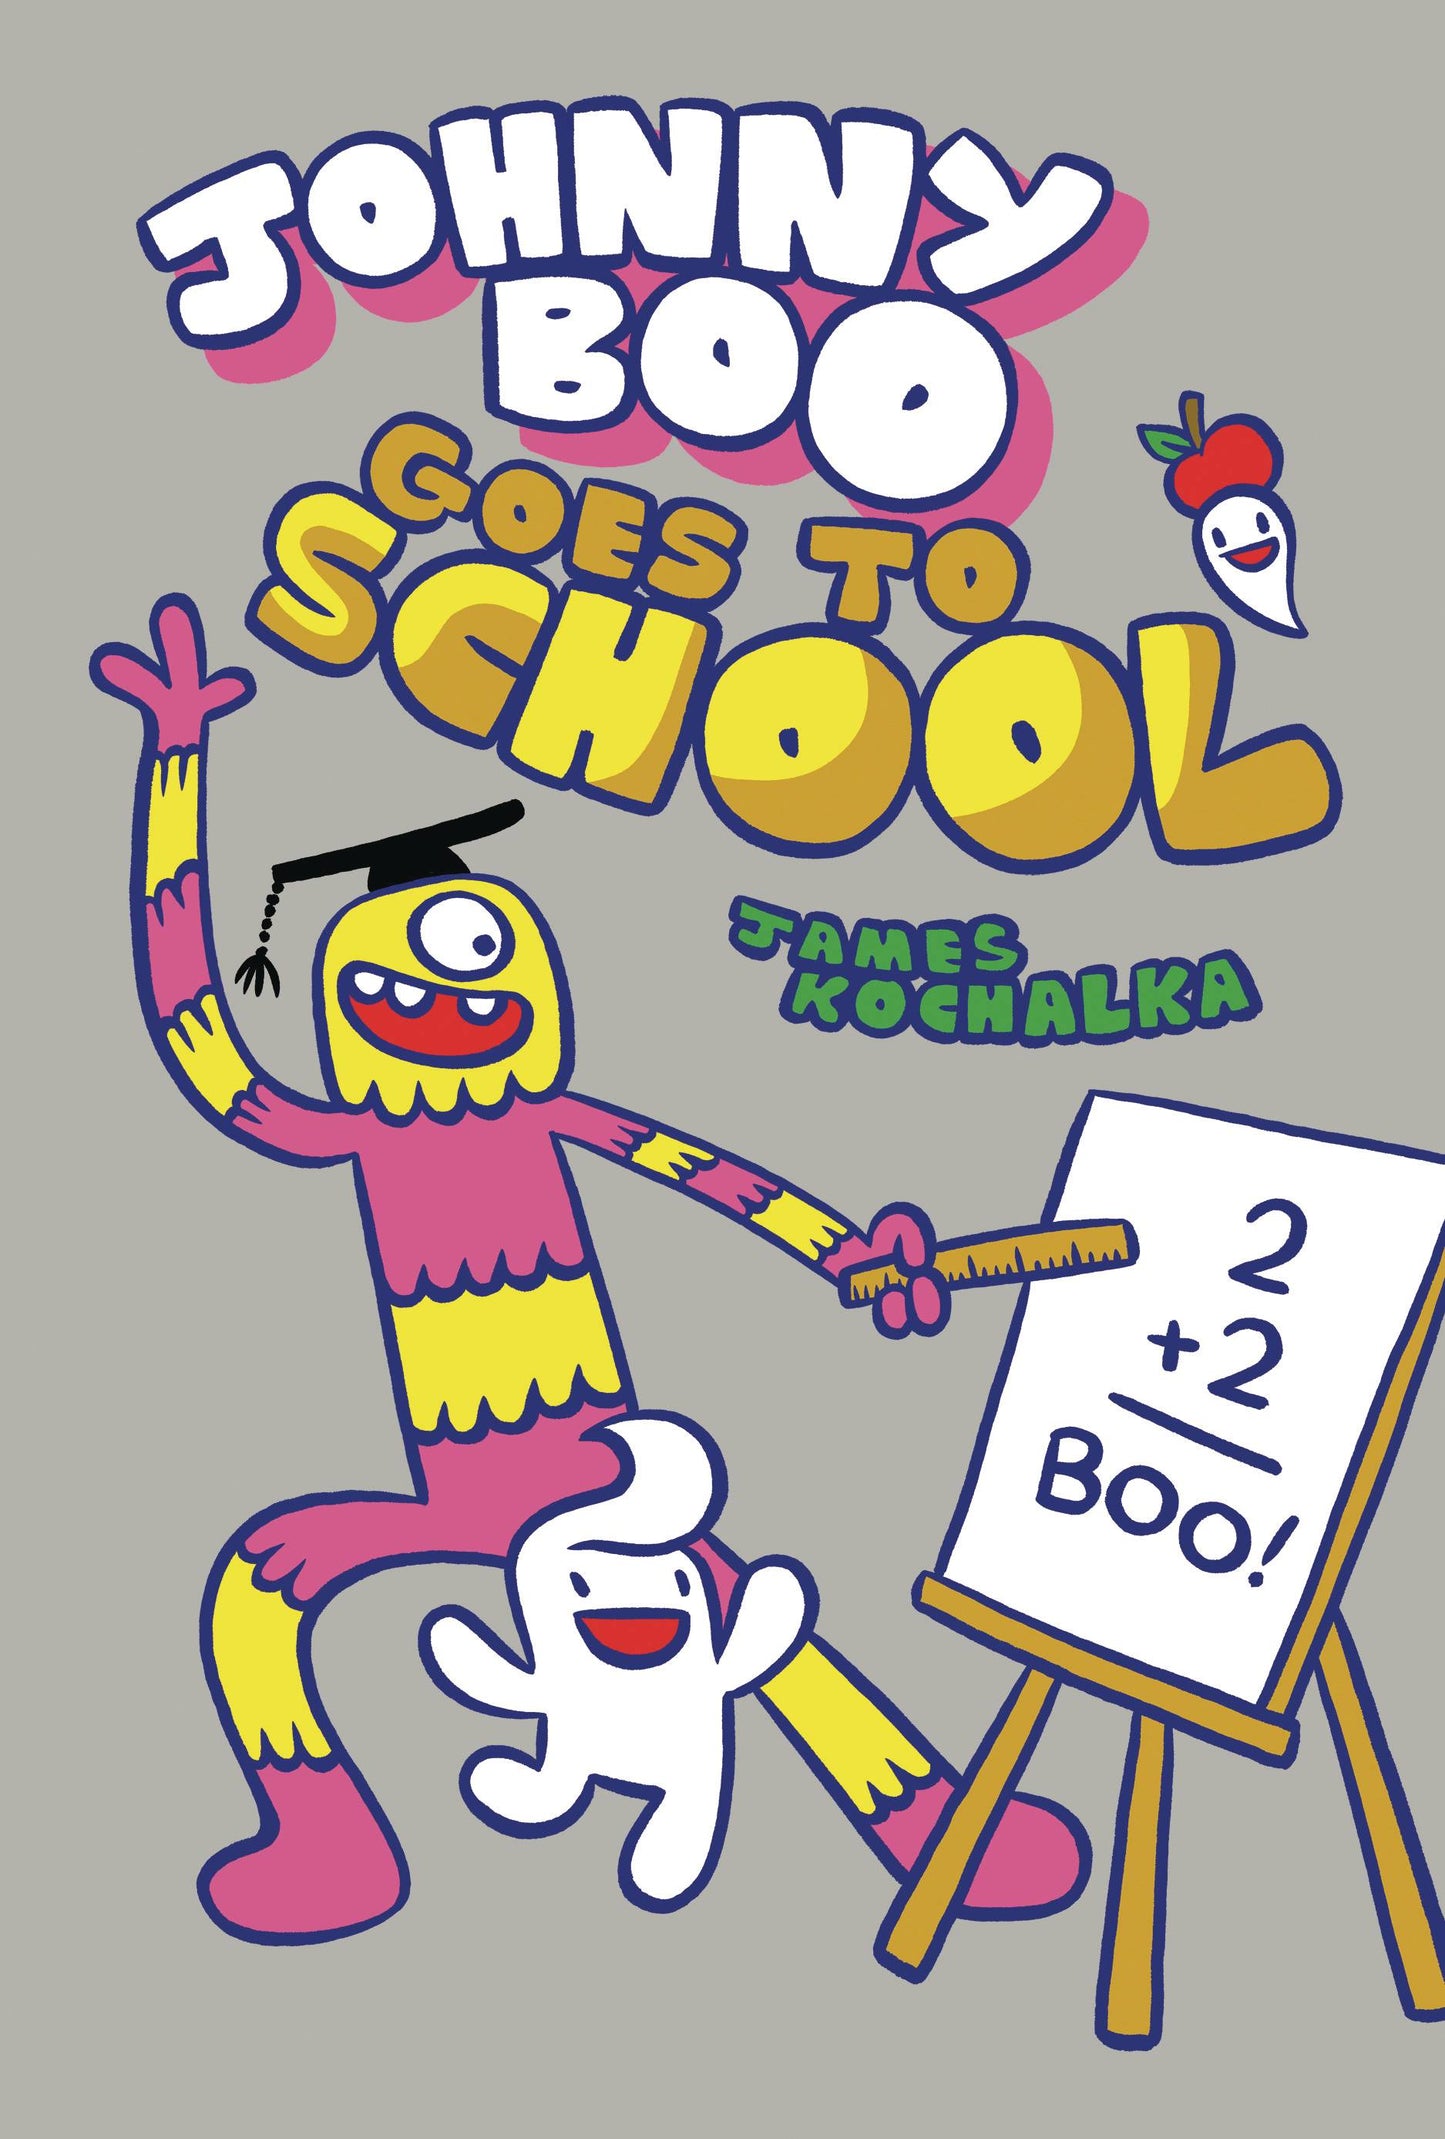 Johnny Boo Hc Vol. 13 Johnny Boo Goes to School